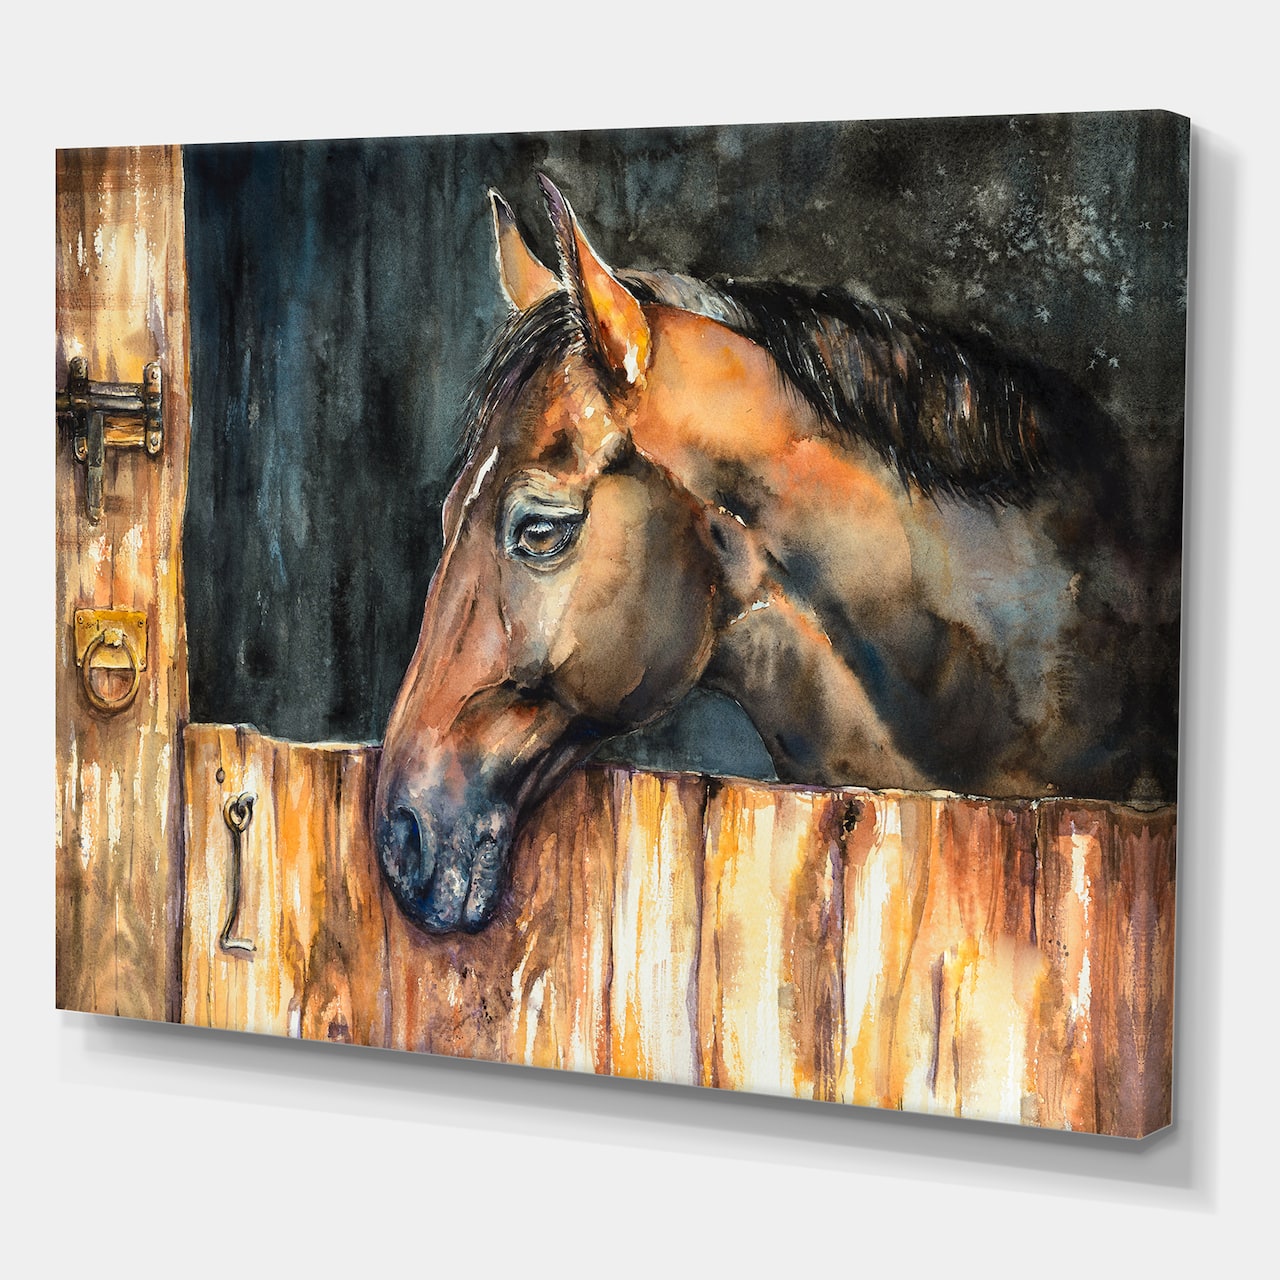 Designart - The Head of A Horse In Stable - Farmhouse Canvas Wall Art Print